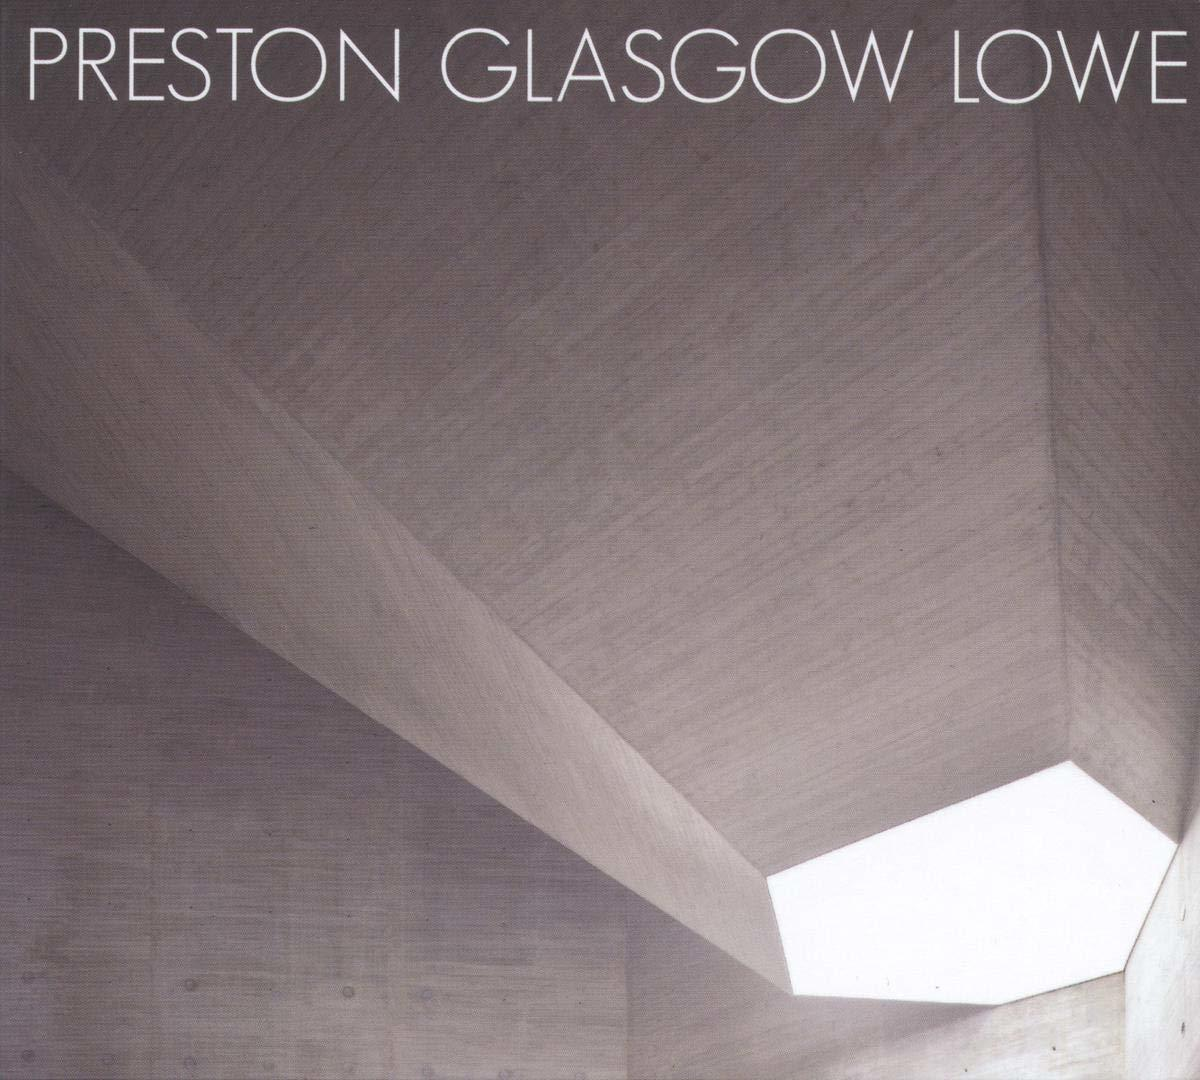 Preston - (Vinyl) Lowe Glasgow 